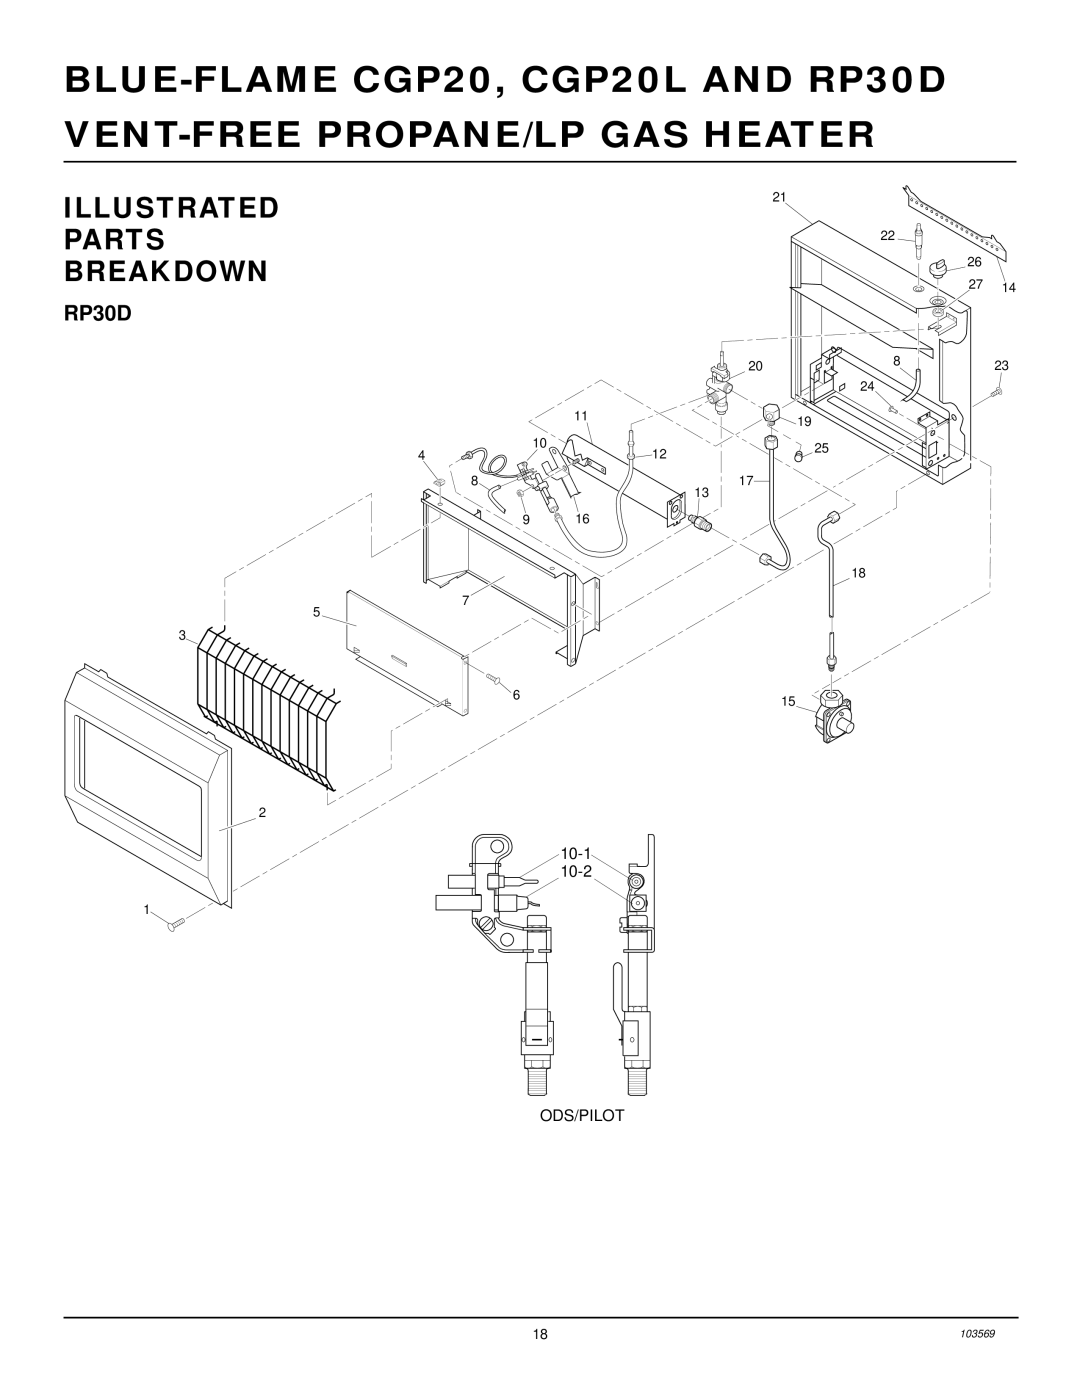 Desa CGP20L installation manual Illustrated Parts Breakdown, RP30D 